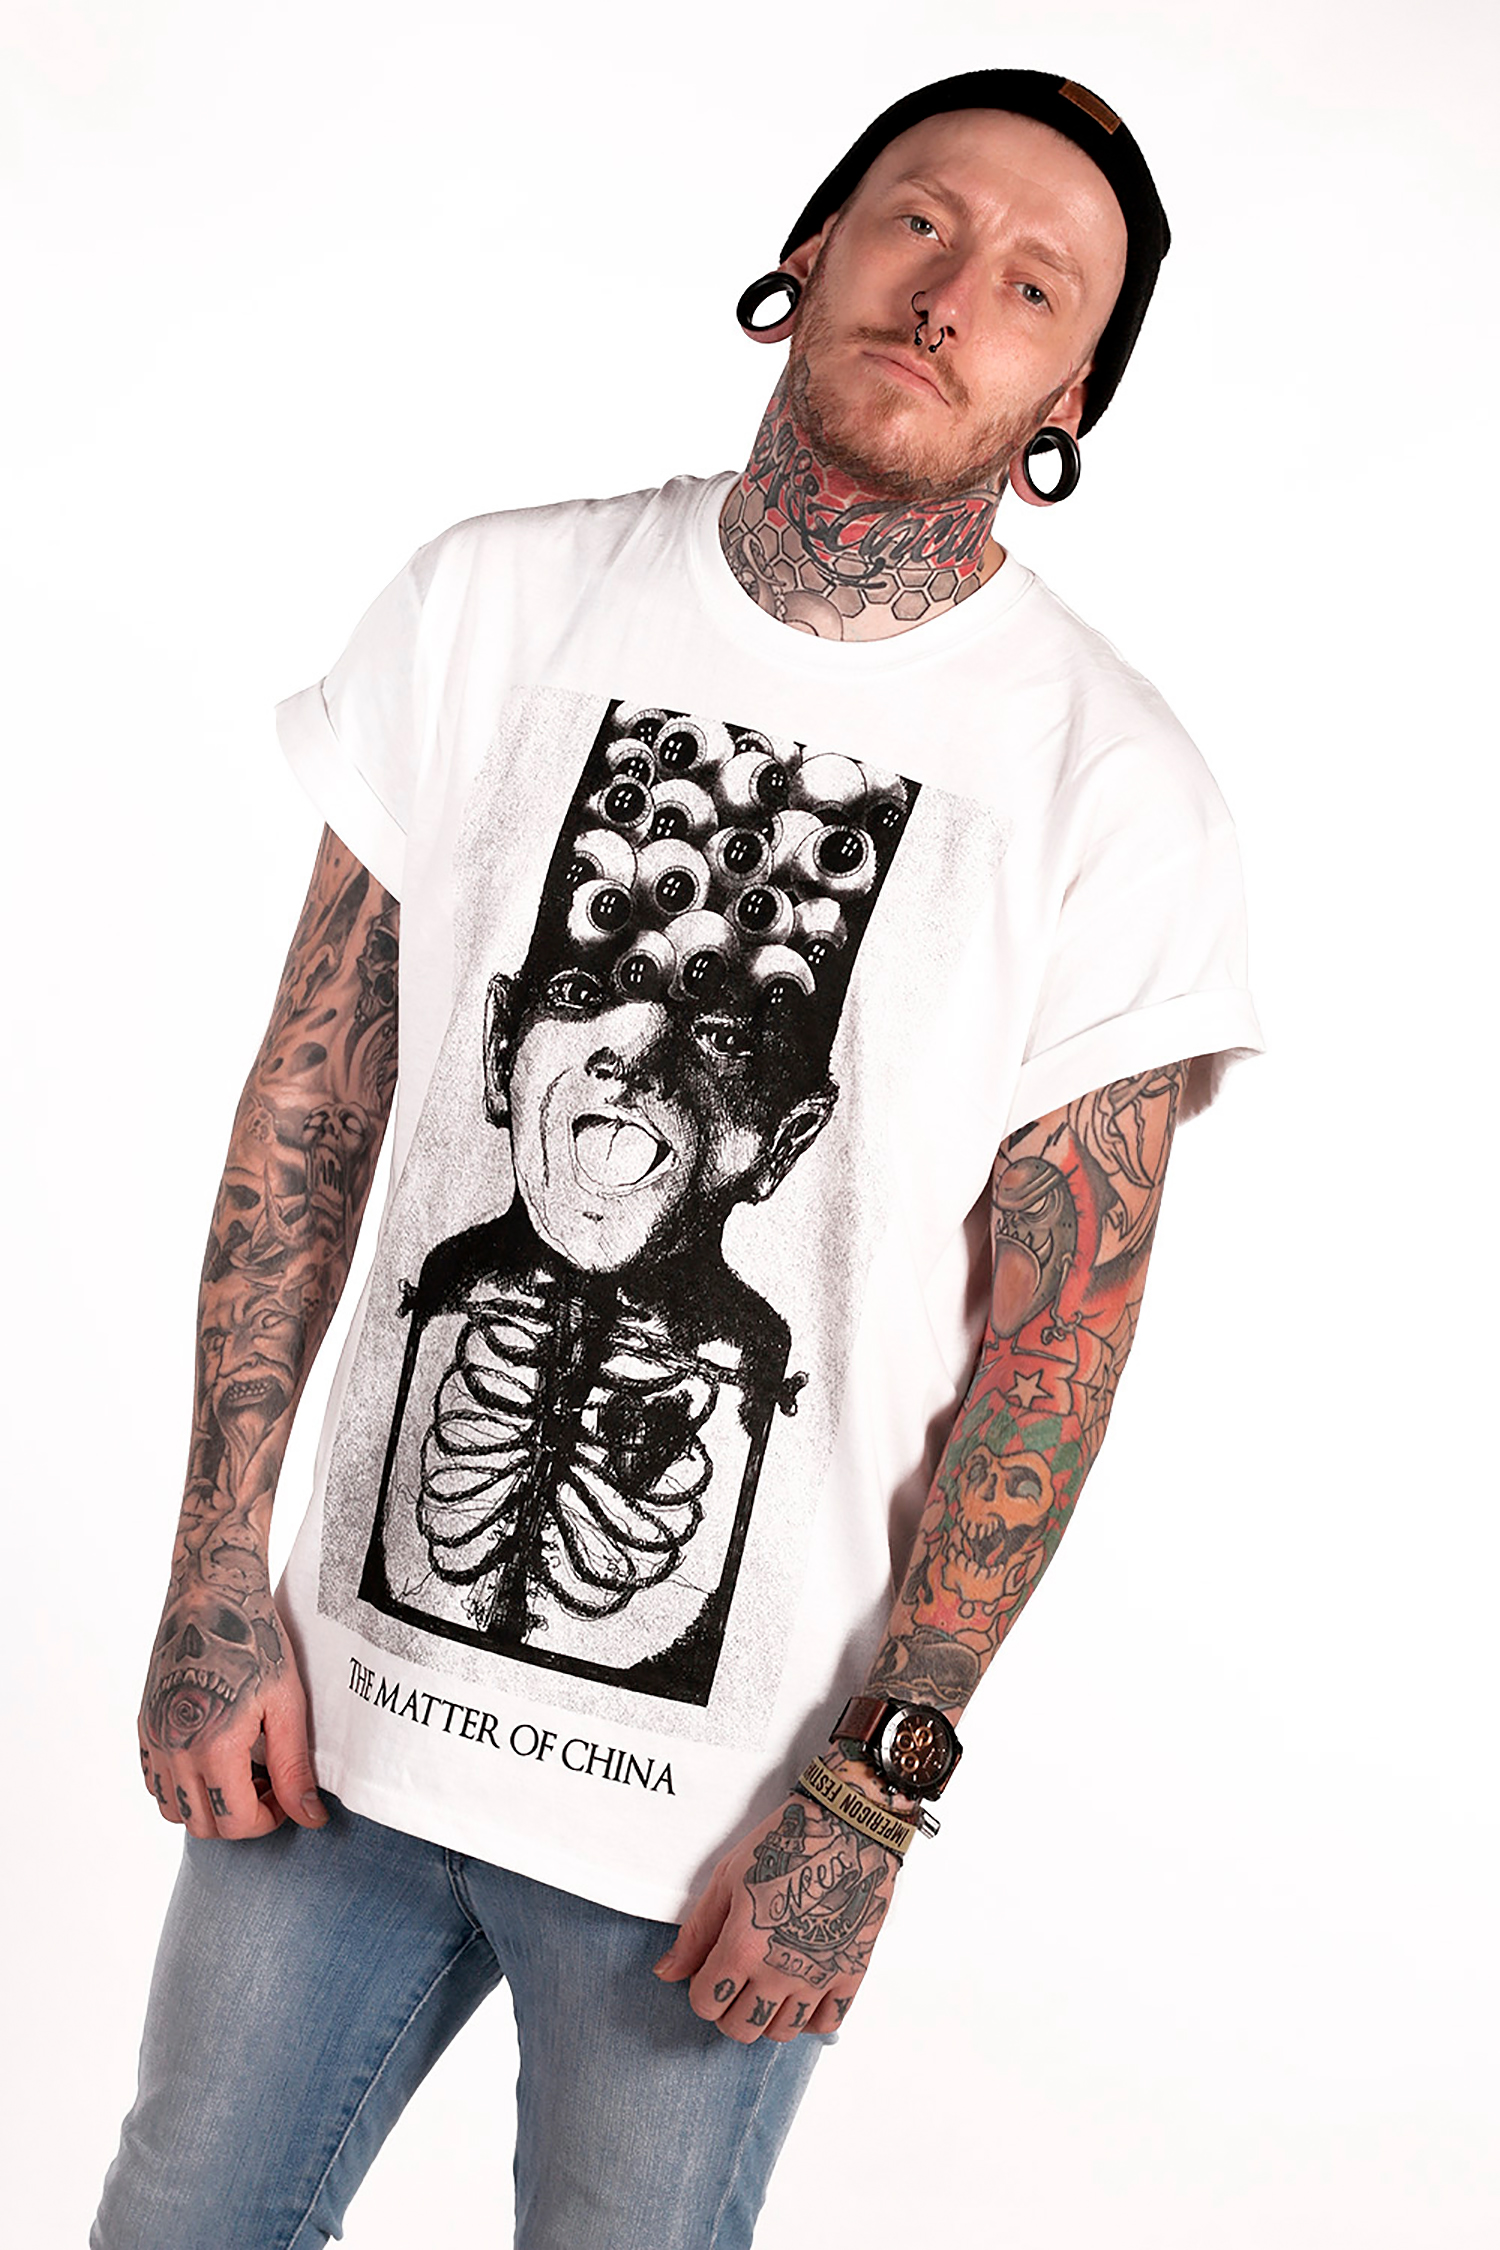 Justinvanwickeren_design_TMOC Merchandise_Shirt_front_Makellos